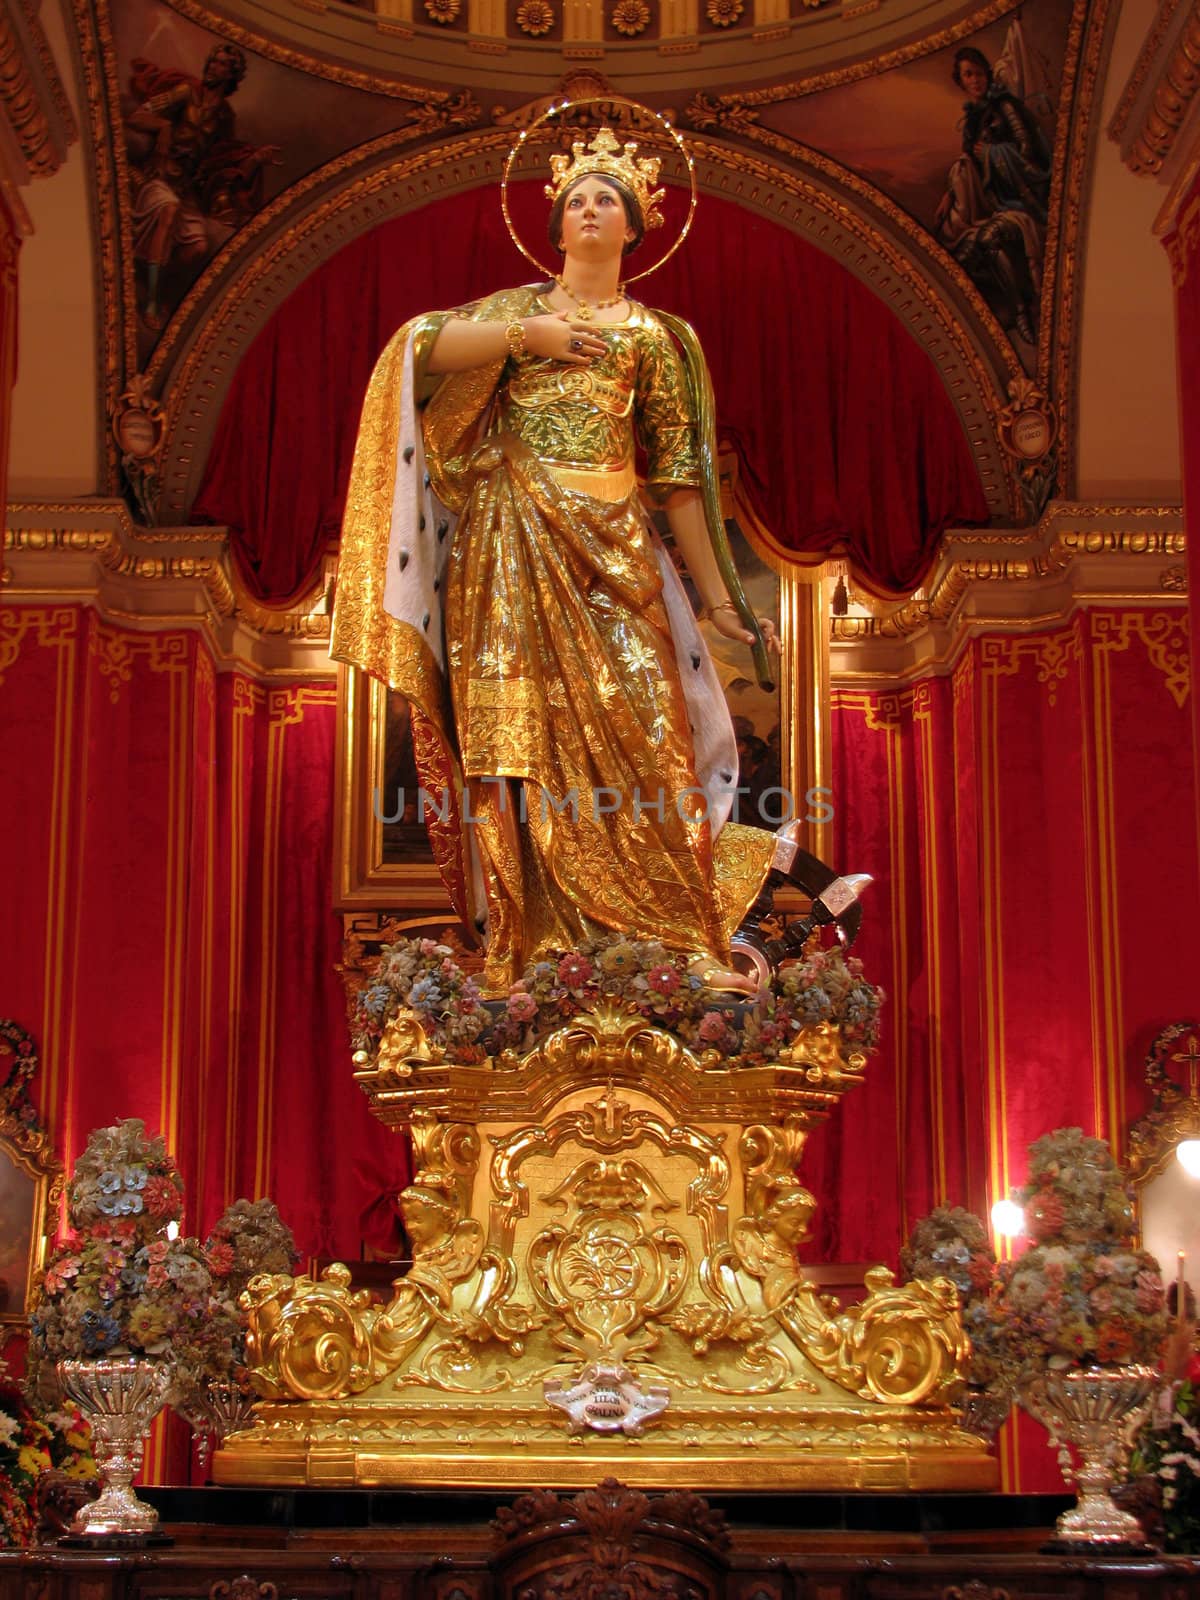 The statue of Saint Catherine of Alexandria in Zurrieq, Malta.